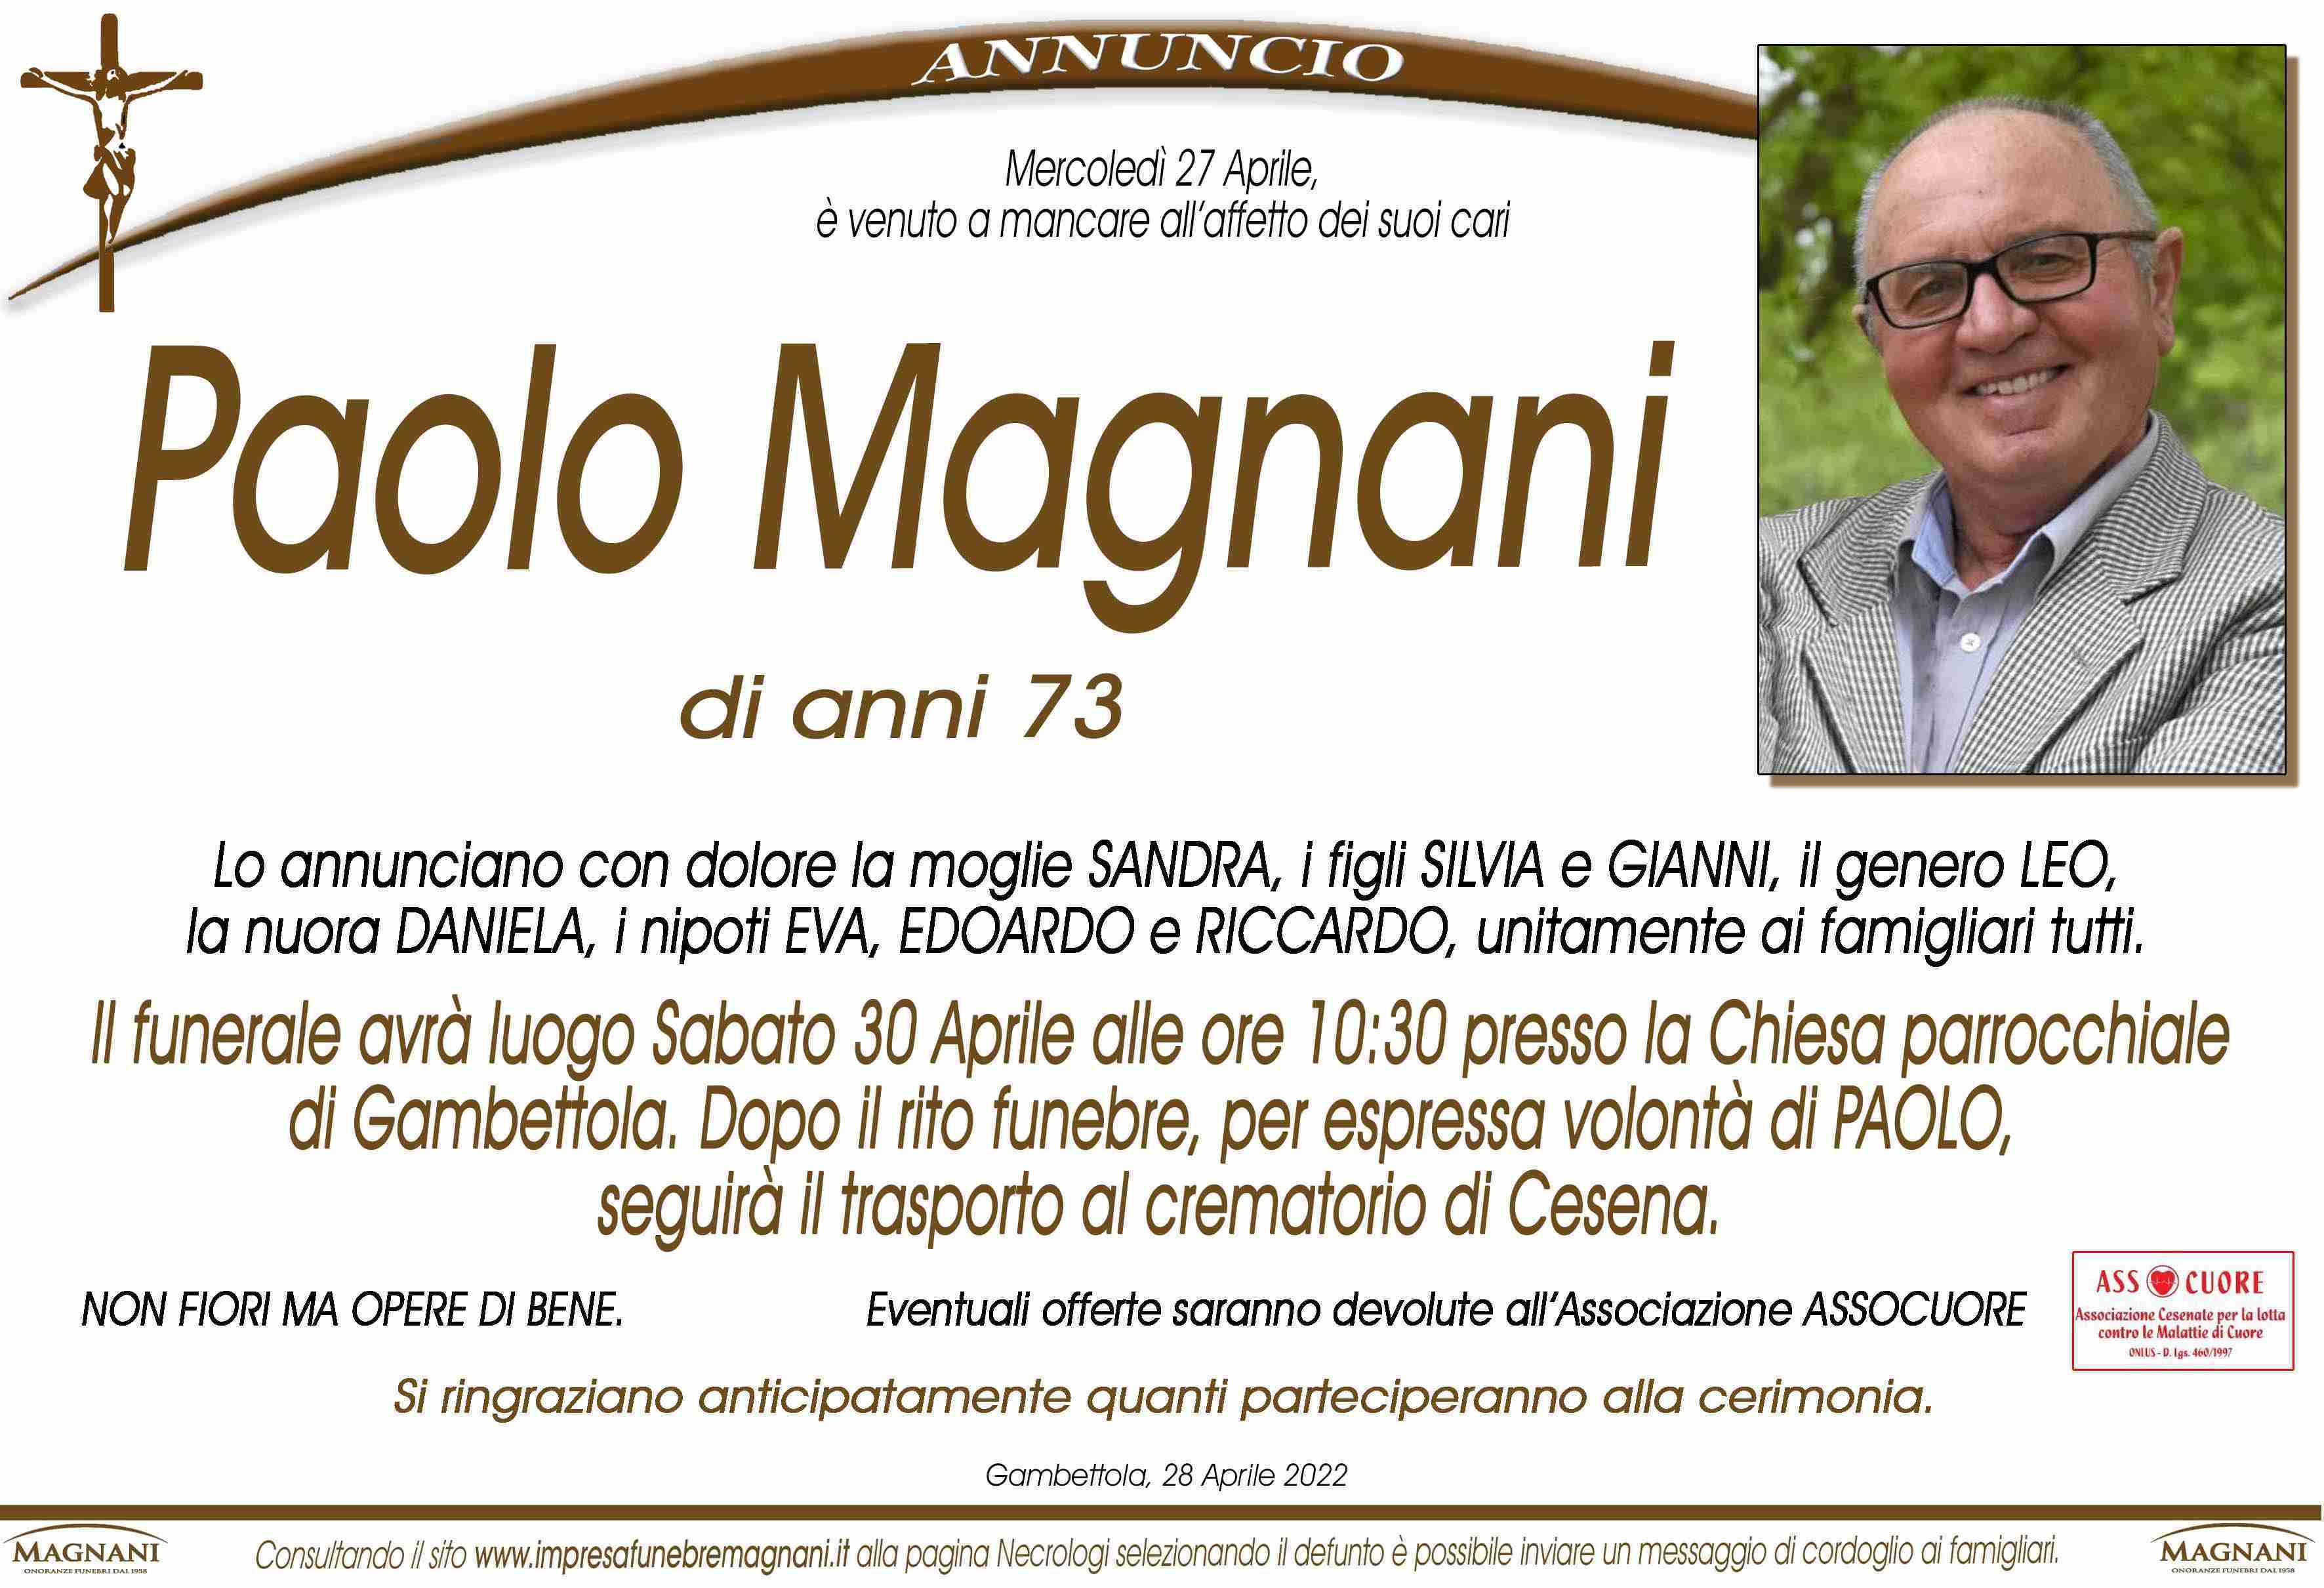 Paolo Magnani